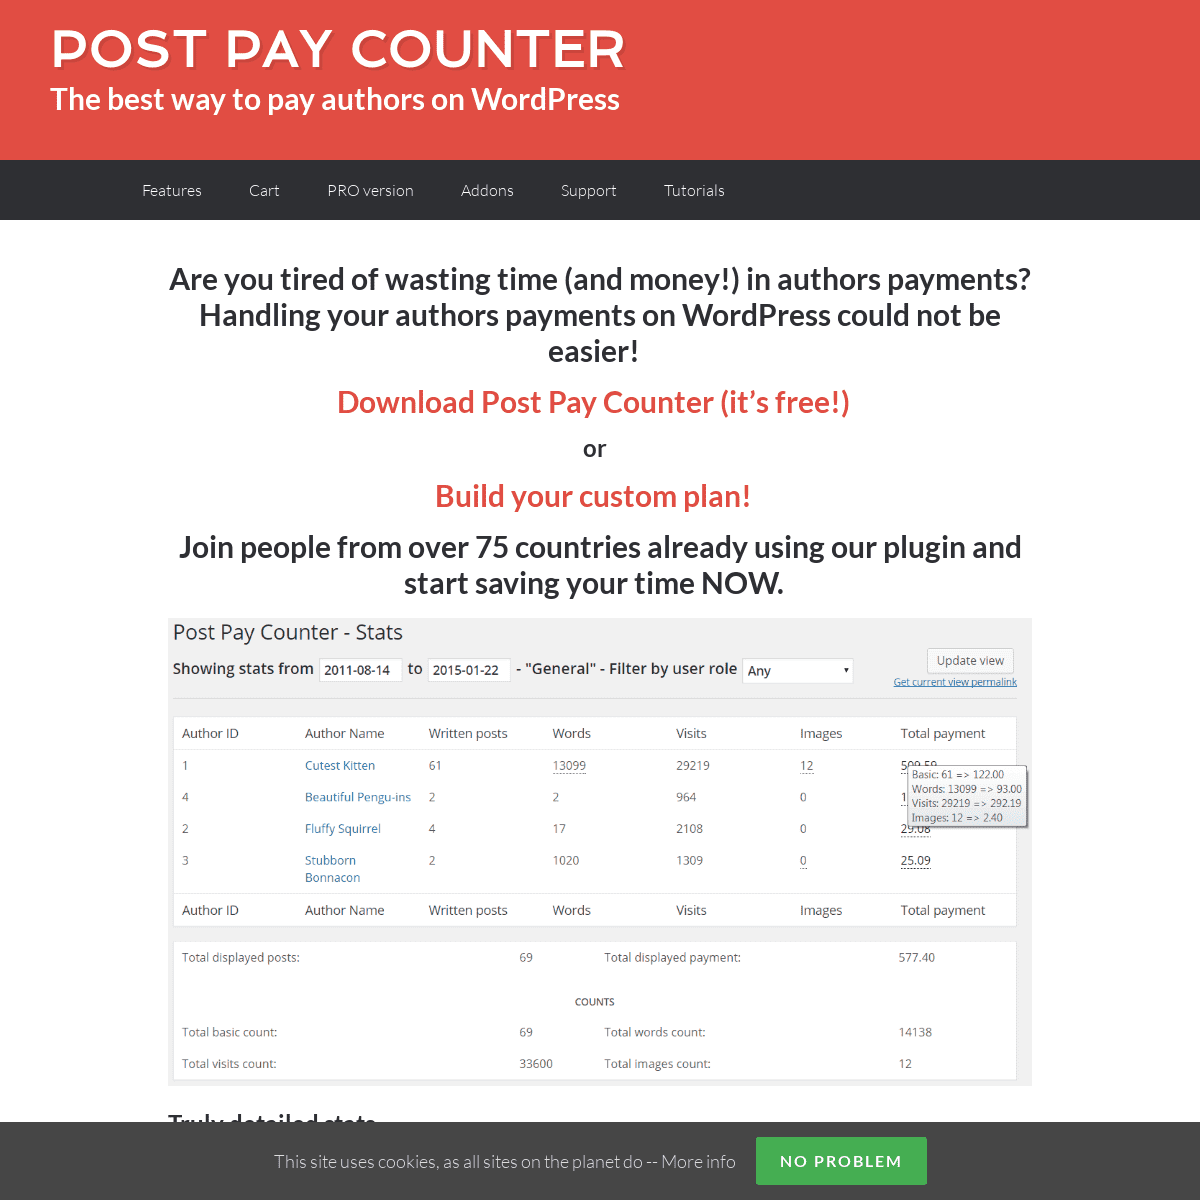 A complete backup of postpaycounter.com